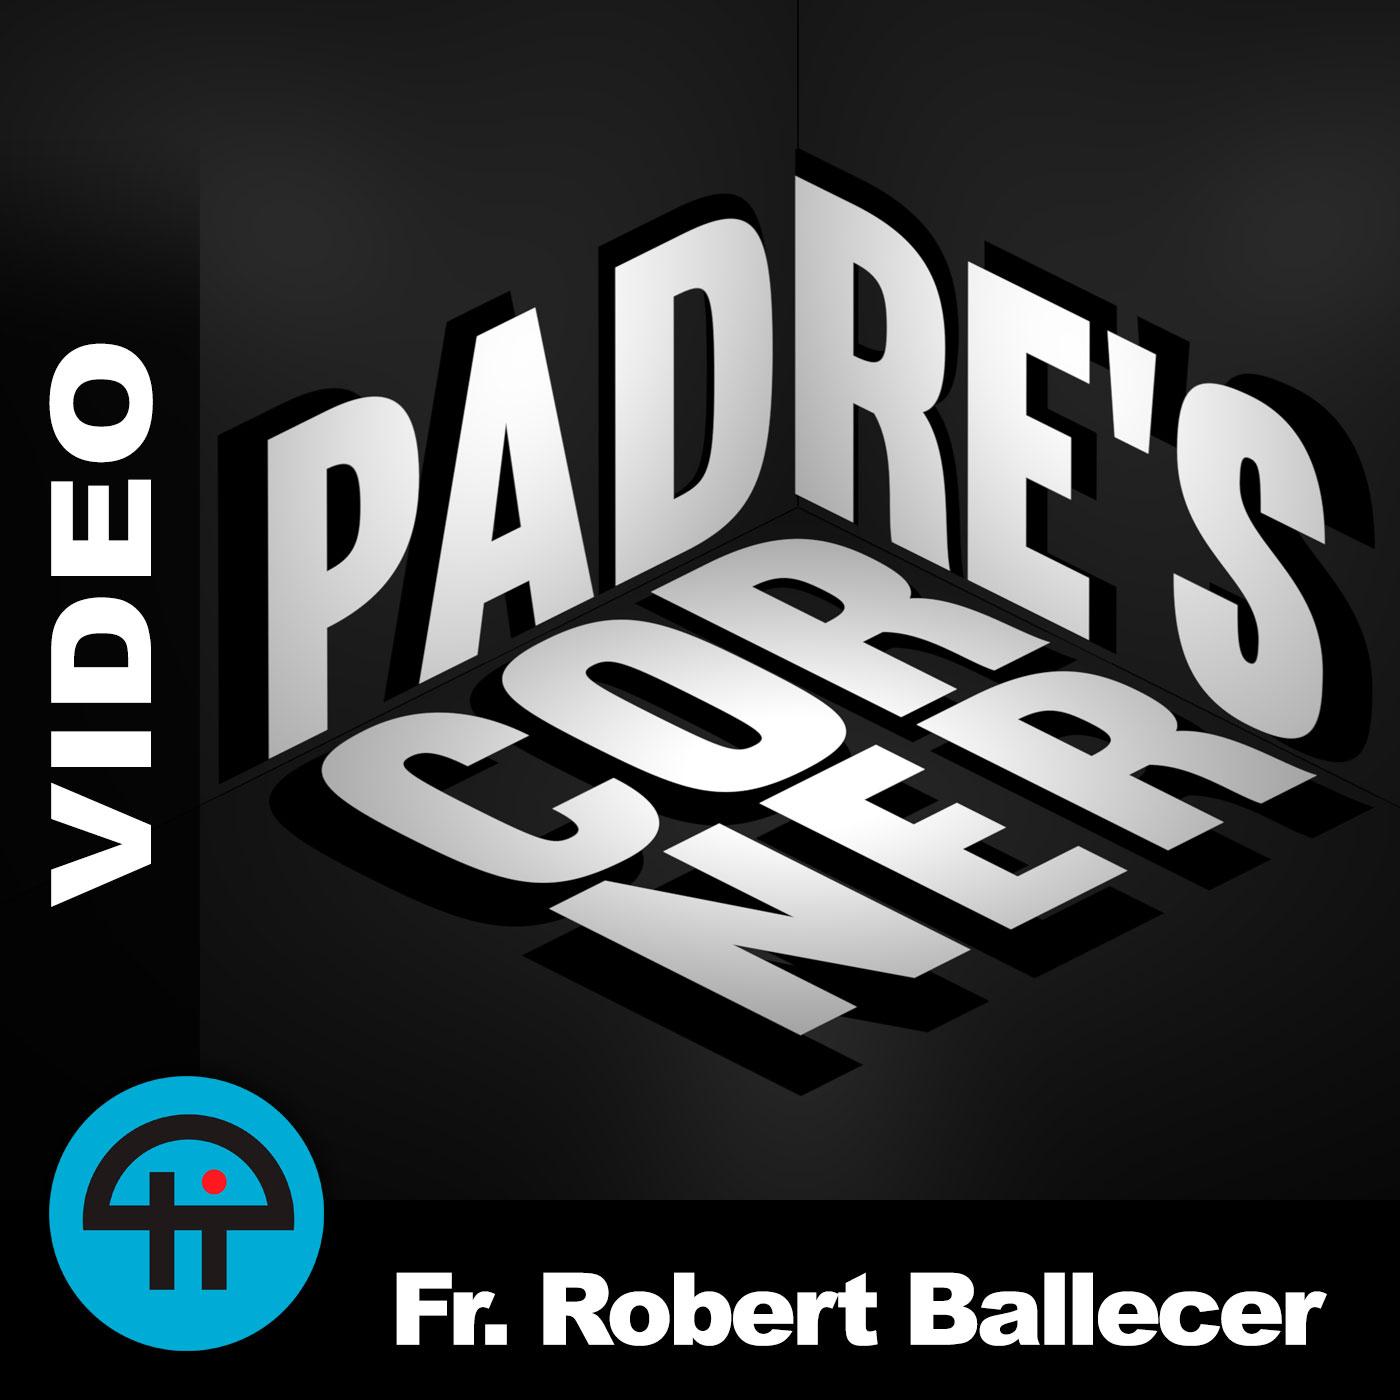 Padre's Corner (Video)